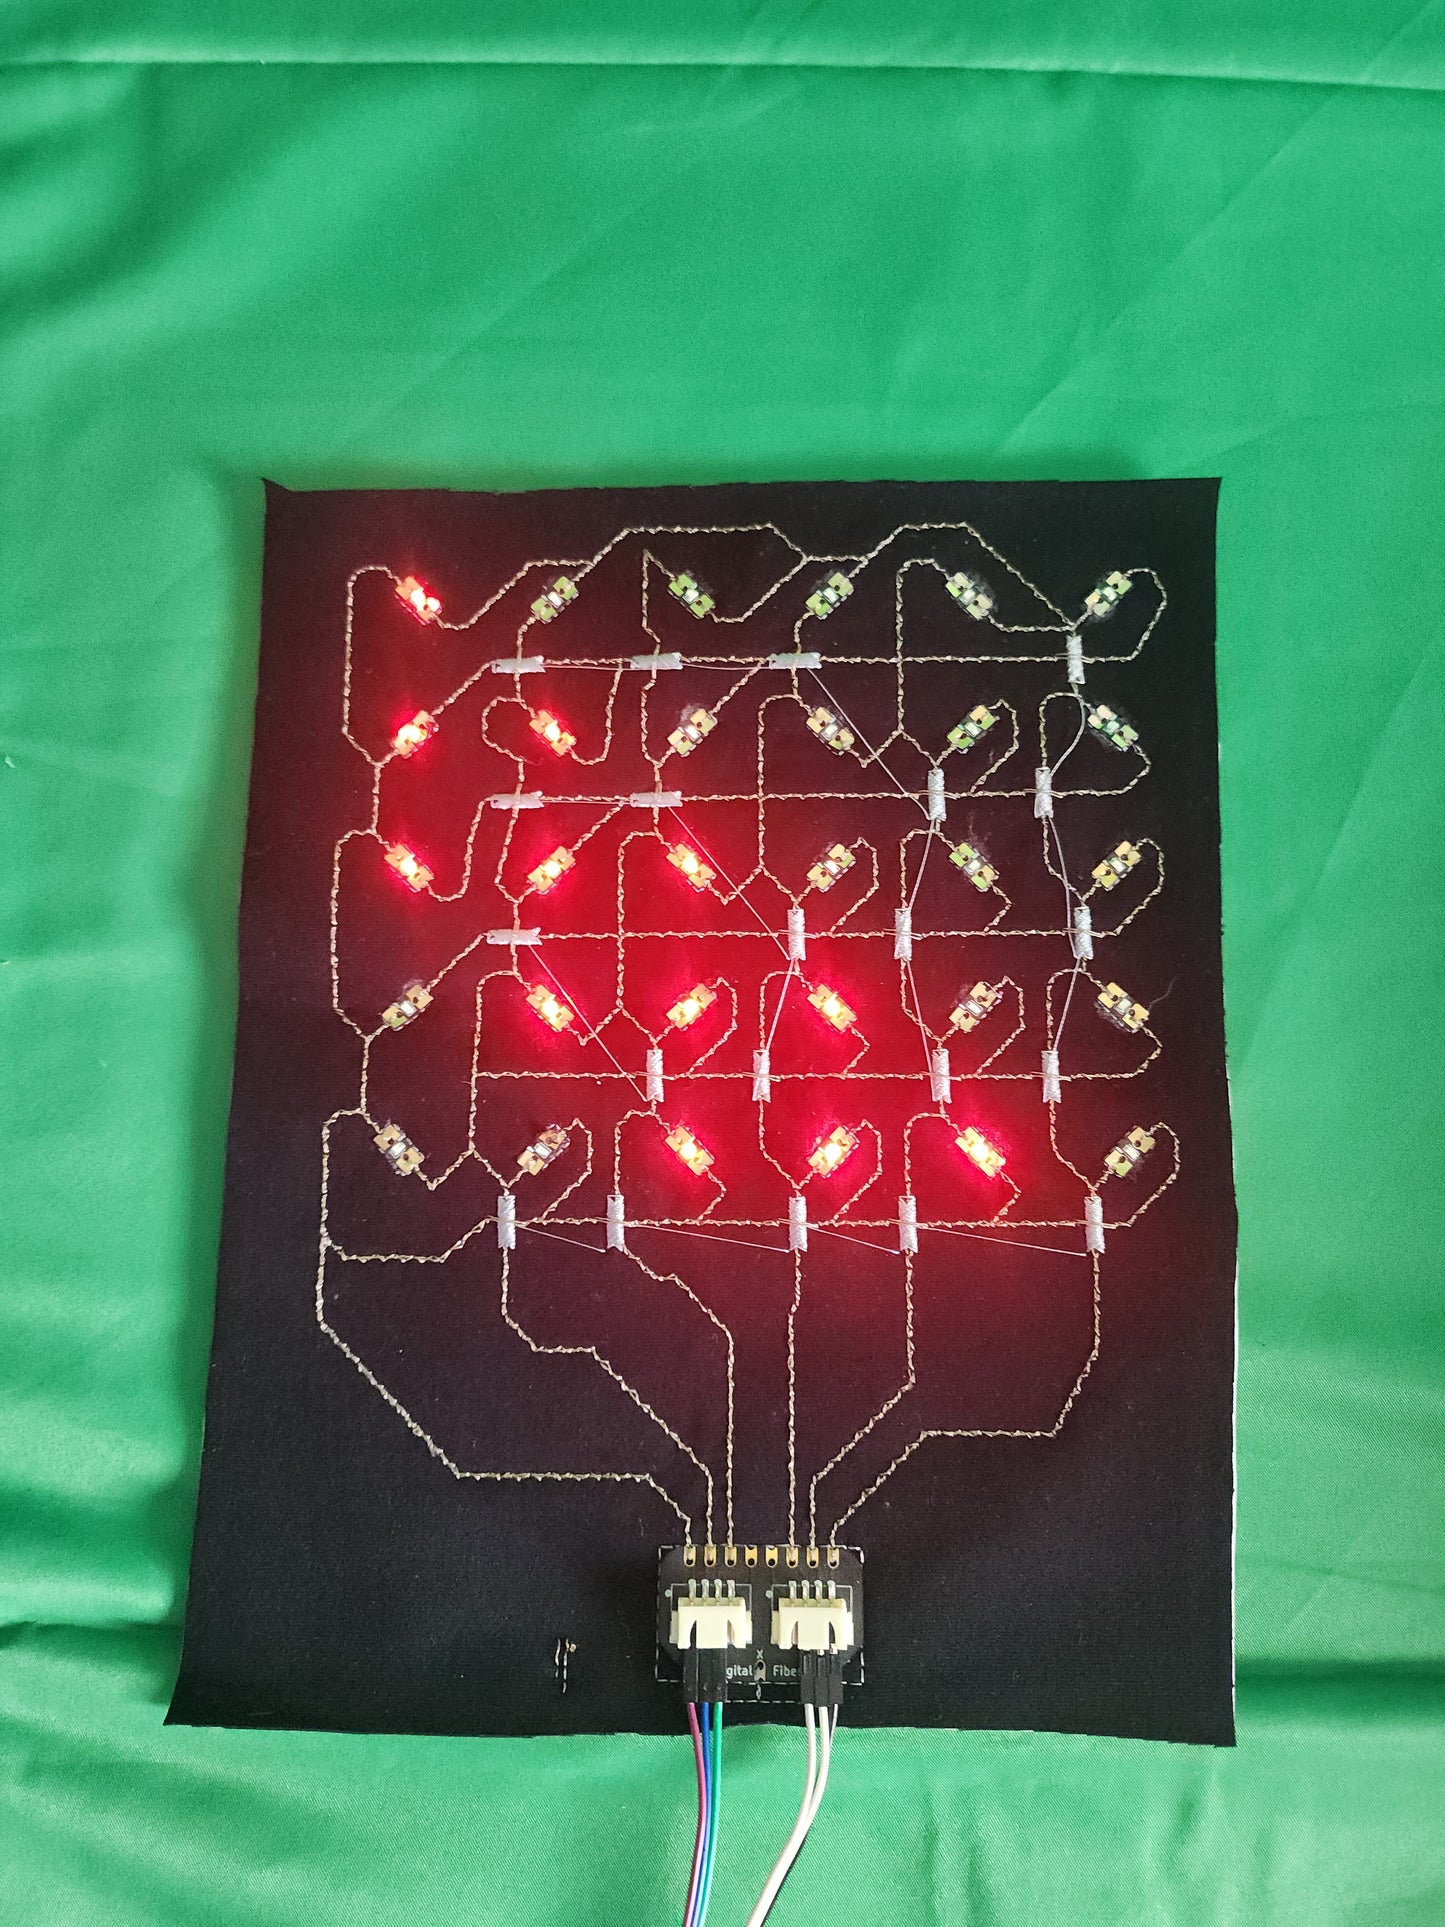 5x6 Charlieplexed LED matrix